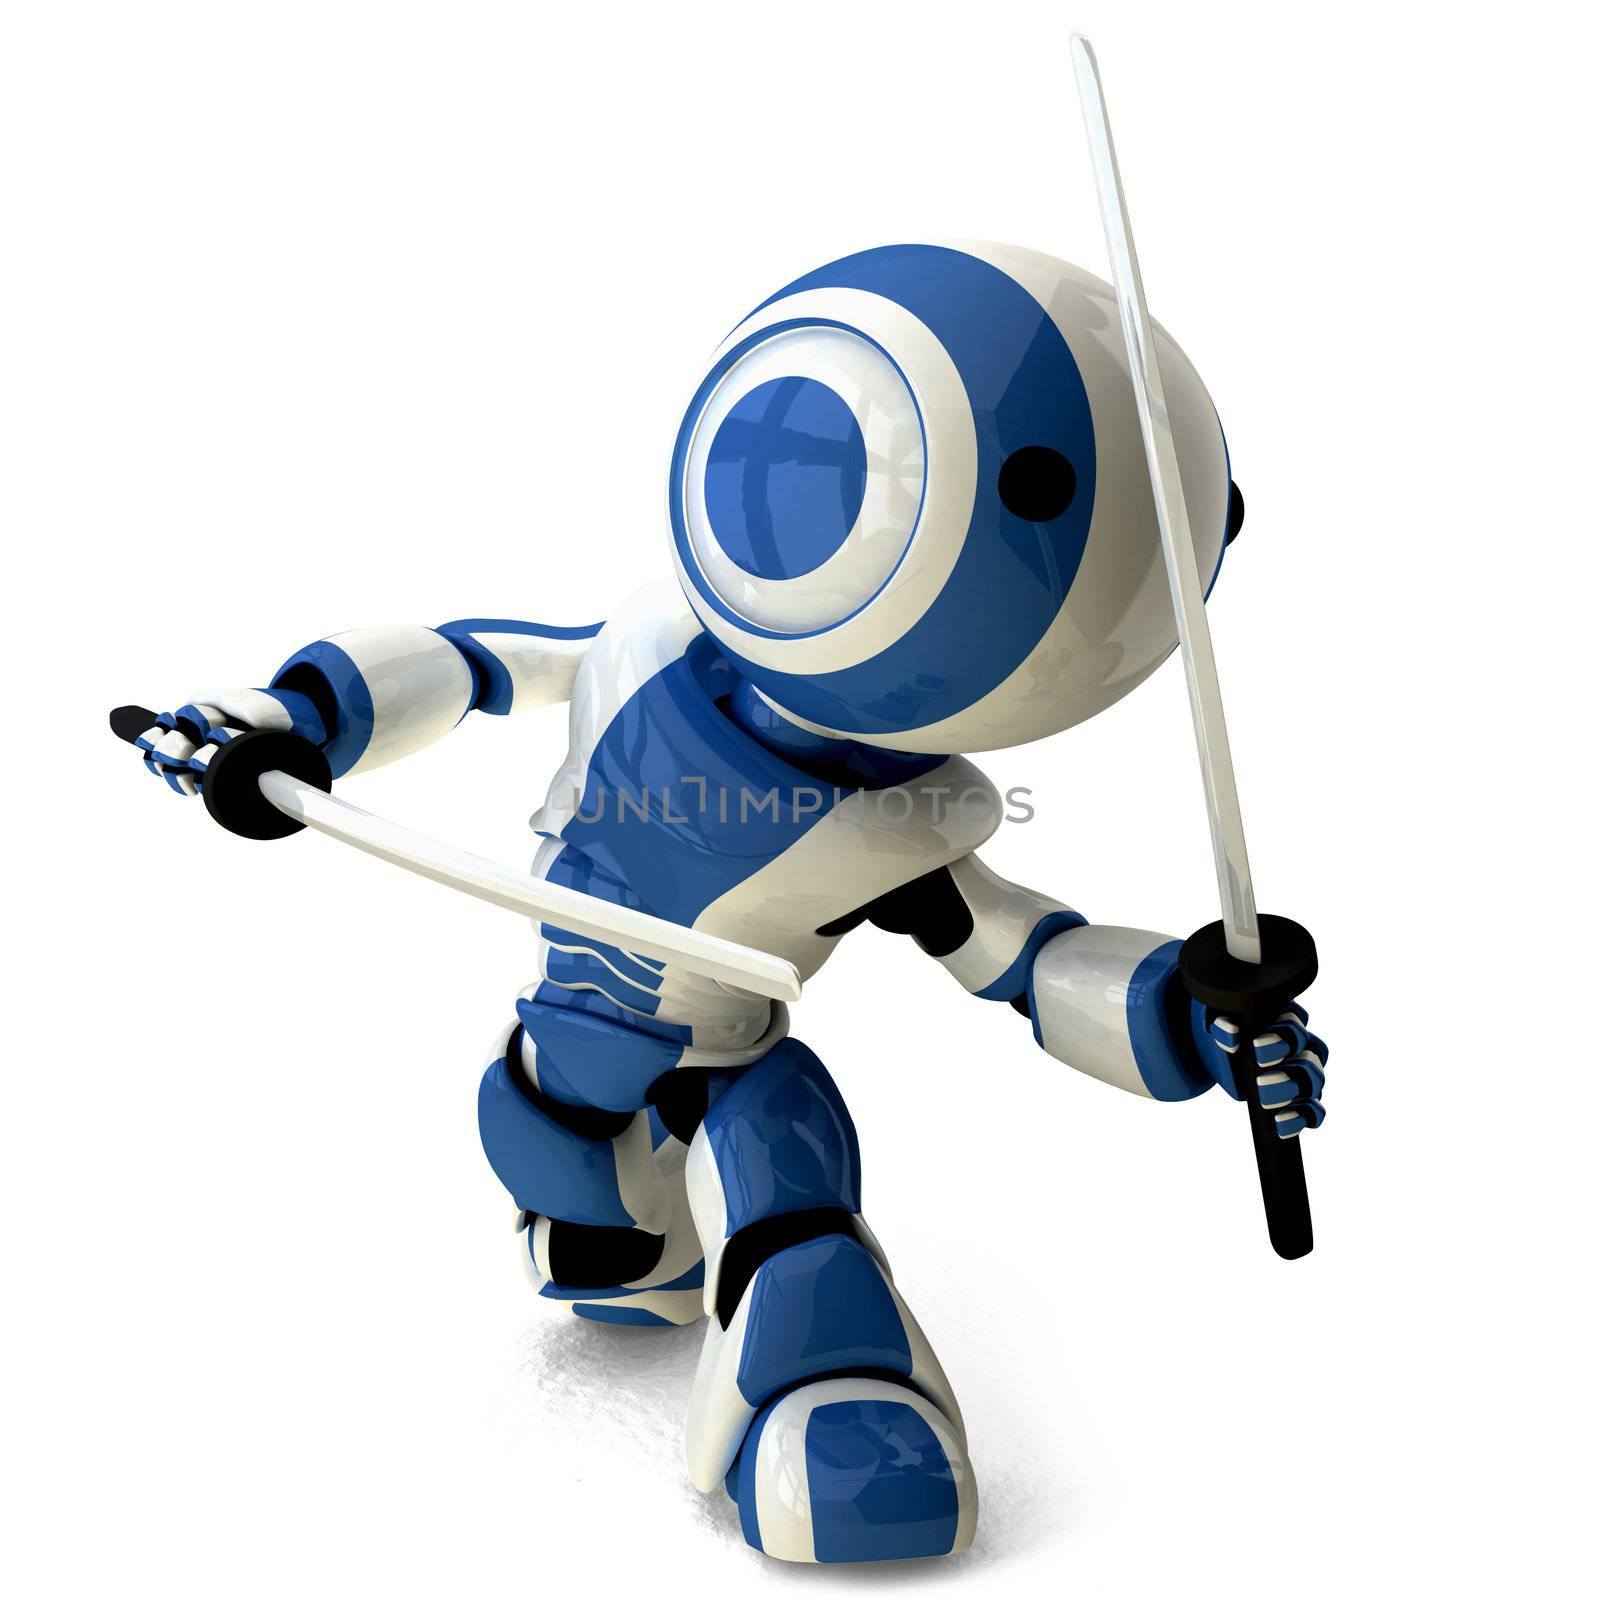 Glossy Blue Robot Ninja Holding Katanas by LeoBlanchette